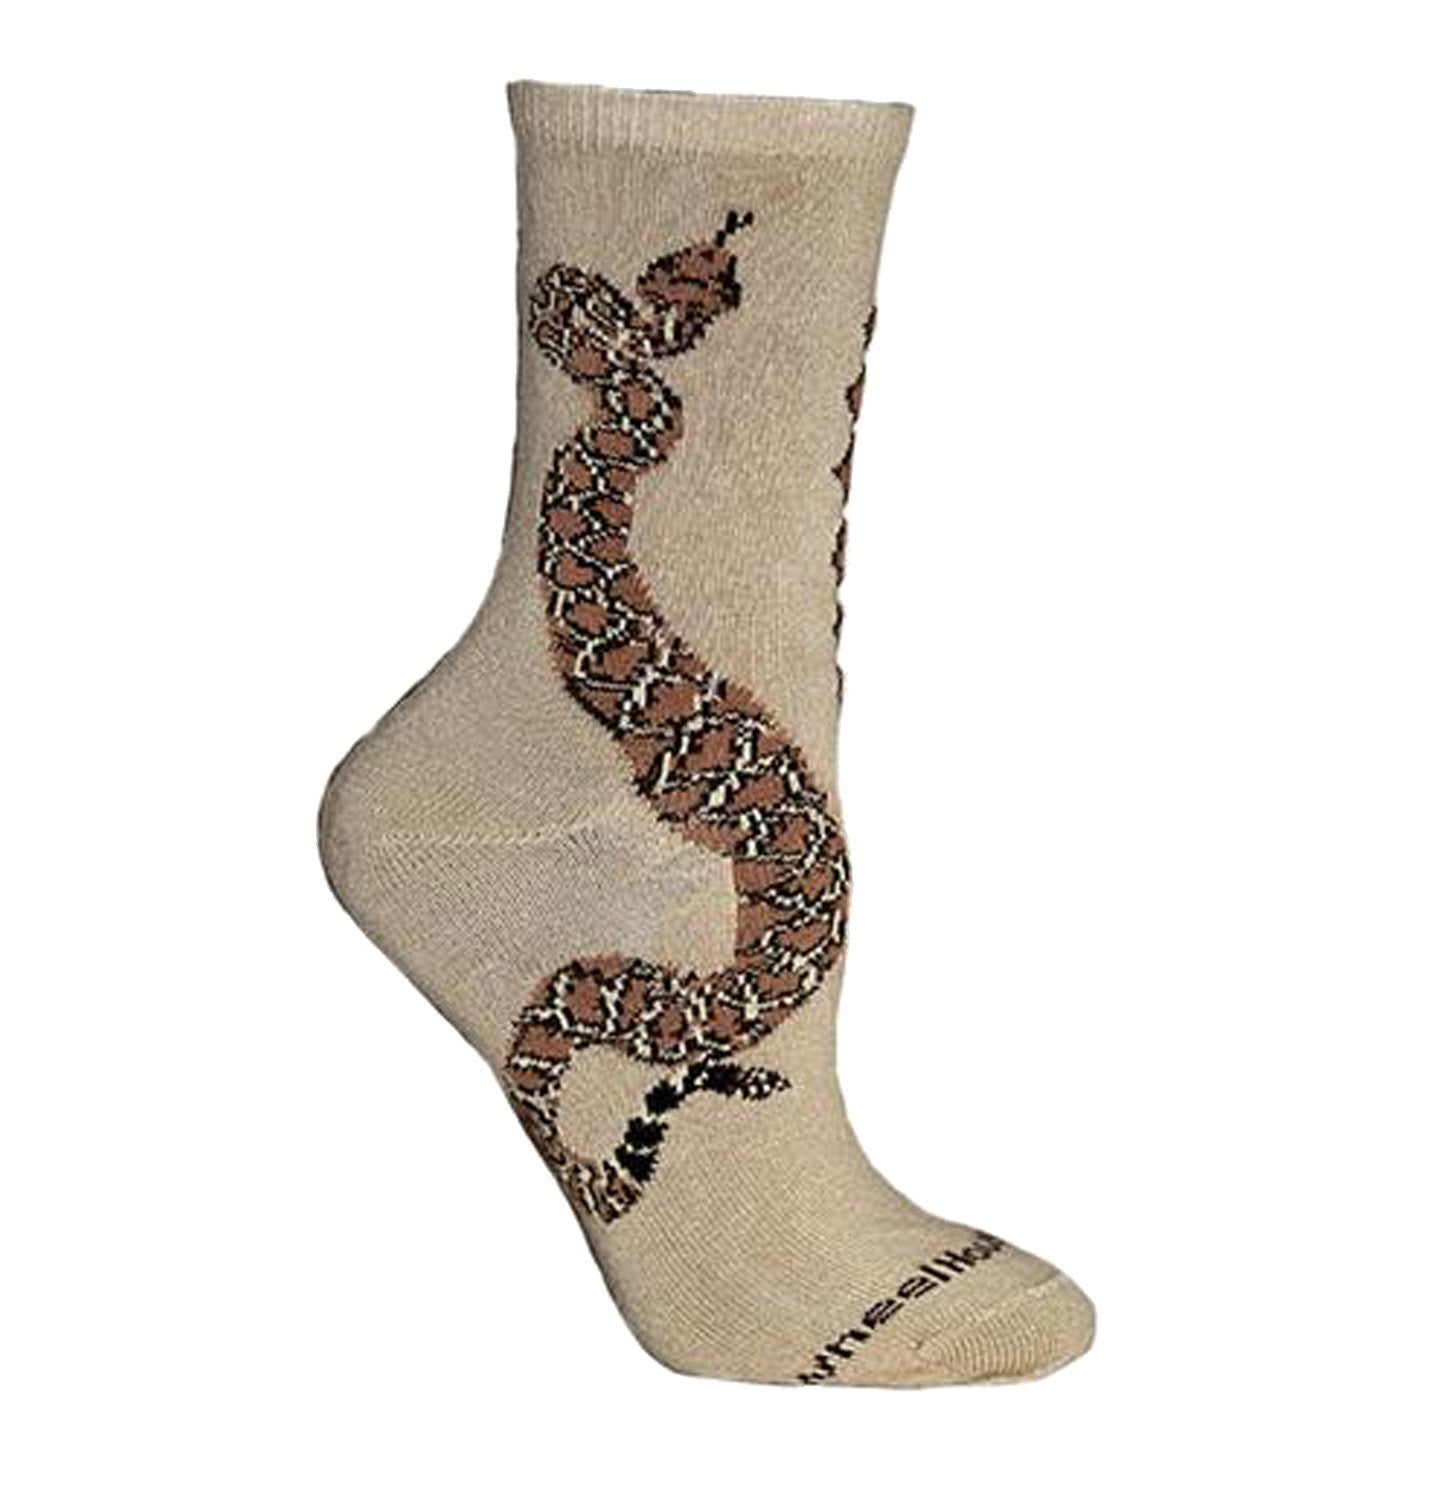 Diamondback Snake on Khaki - Adult Cotton Crew Socks